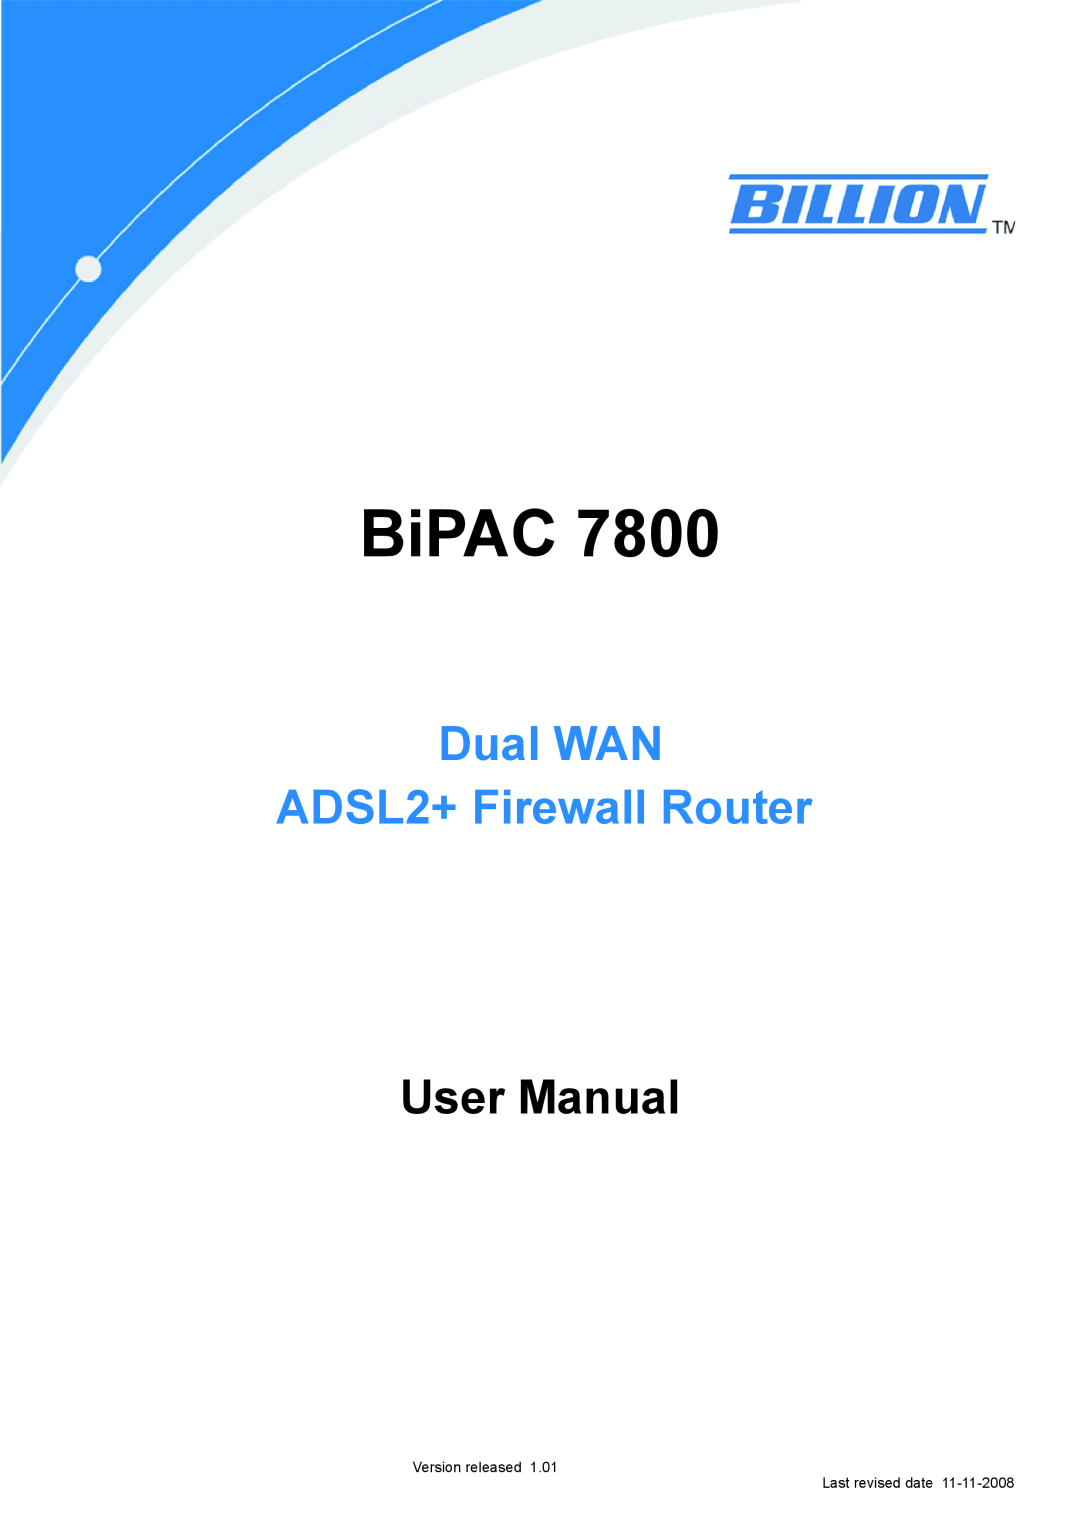 Billion Electric Company 7800 user manual BiPAC, Dual WAN ADSL2+ Firewall Router, User Manual 